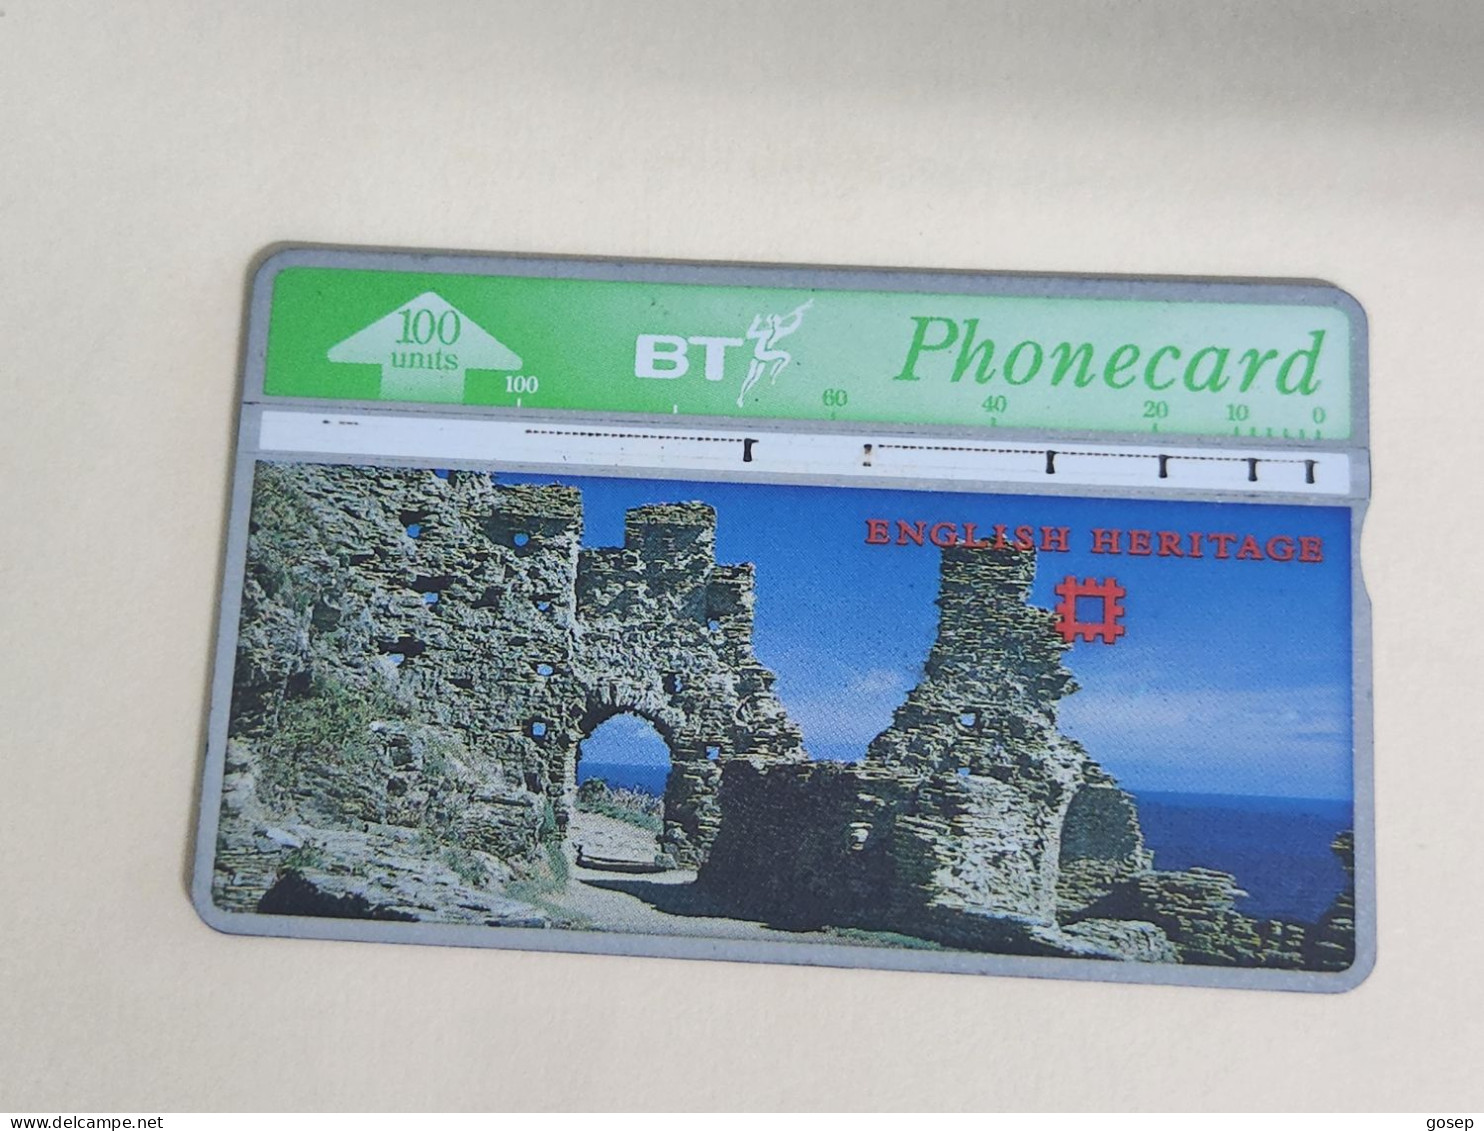 United Kingdom-(BTA121)-HERITAGE-Tintalgel Castle-(209)(100units)(527H03606)price Cataloge3.00£-used+1card Prepiad Free - BT Emissions Publicitaires